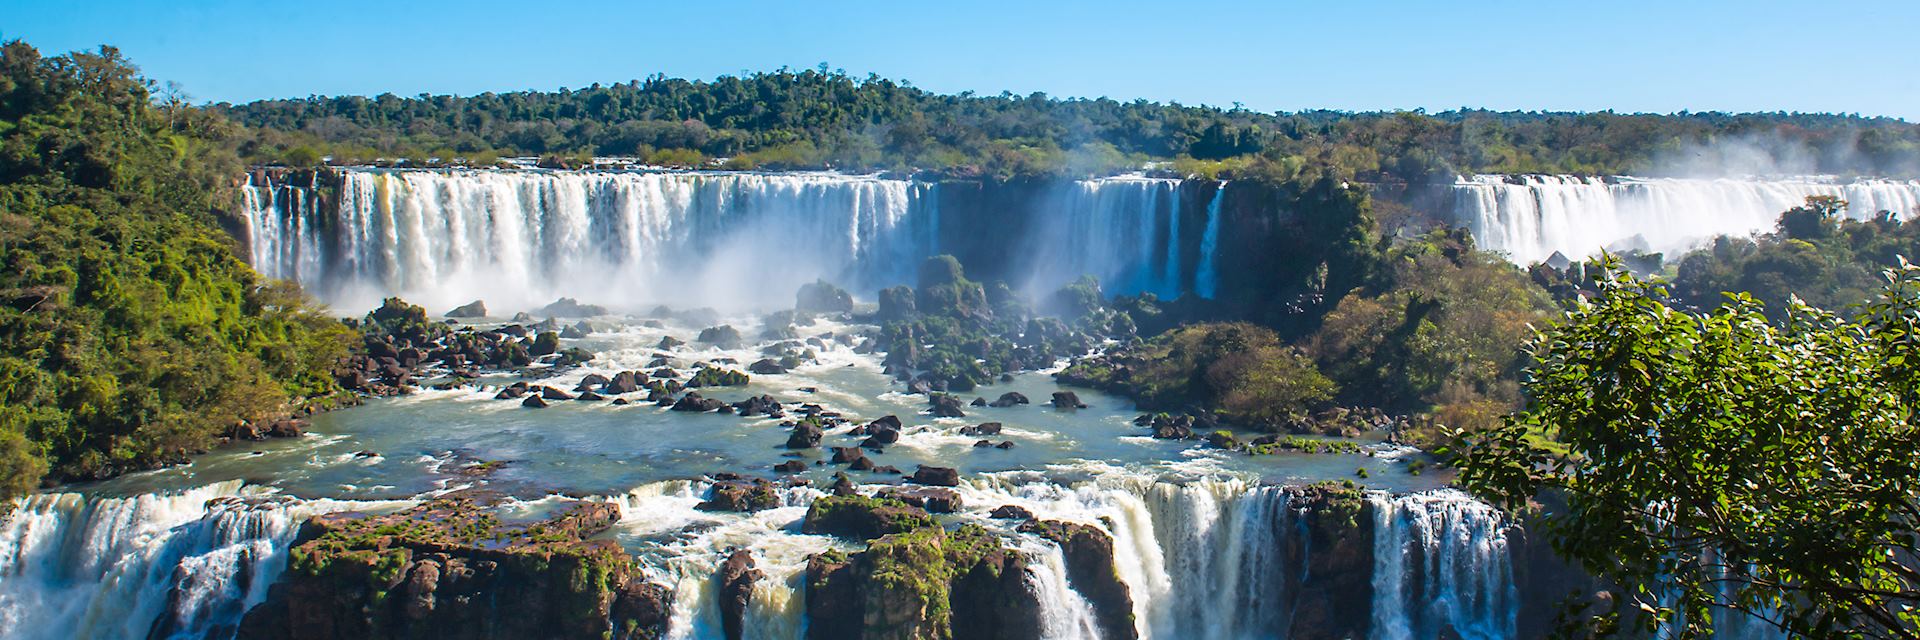 Iguaçu Falls, Brazil